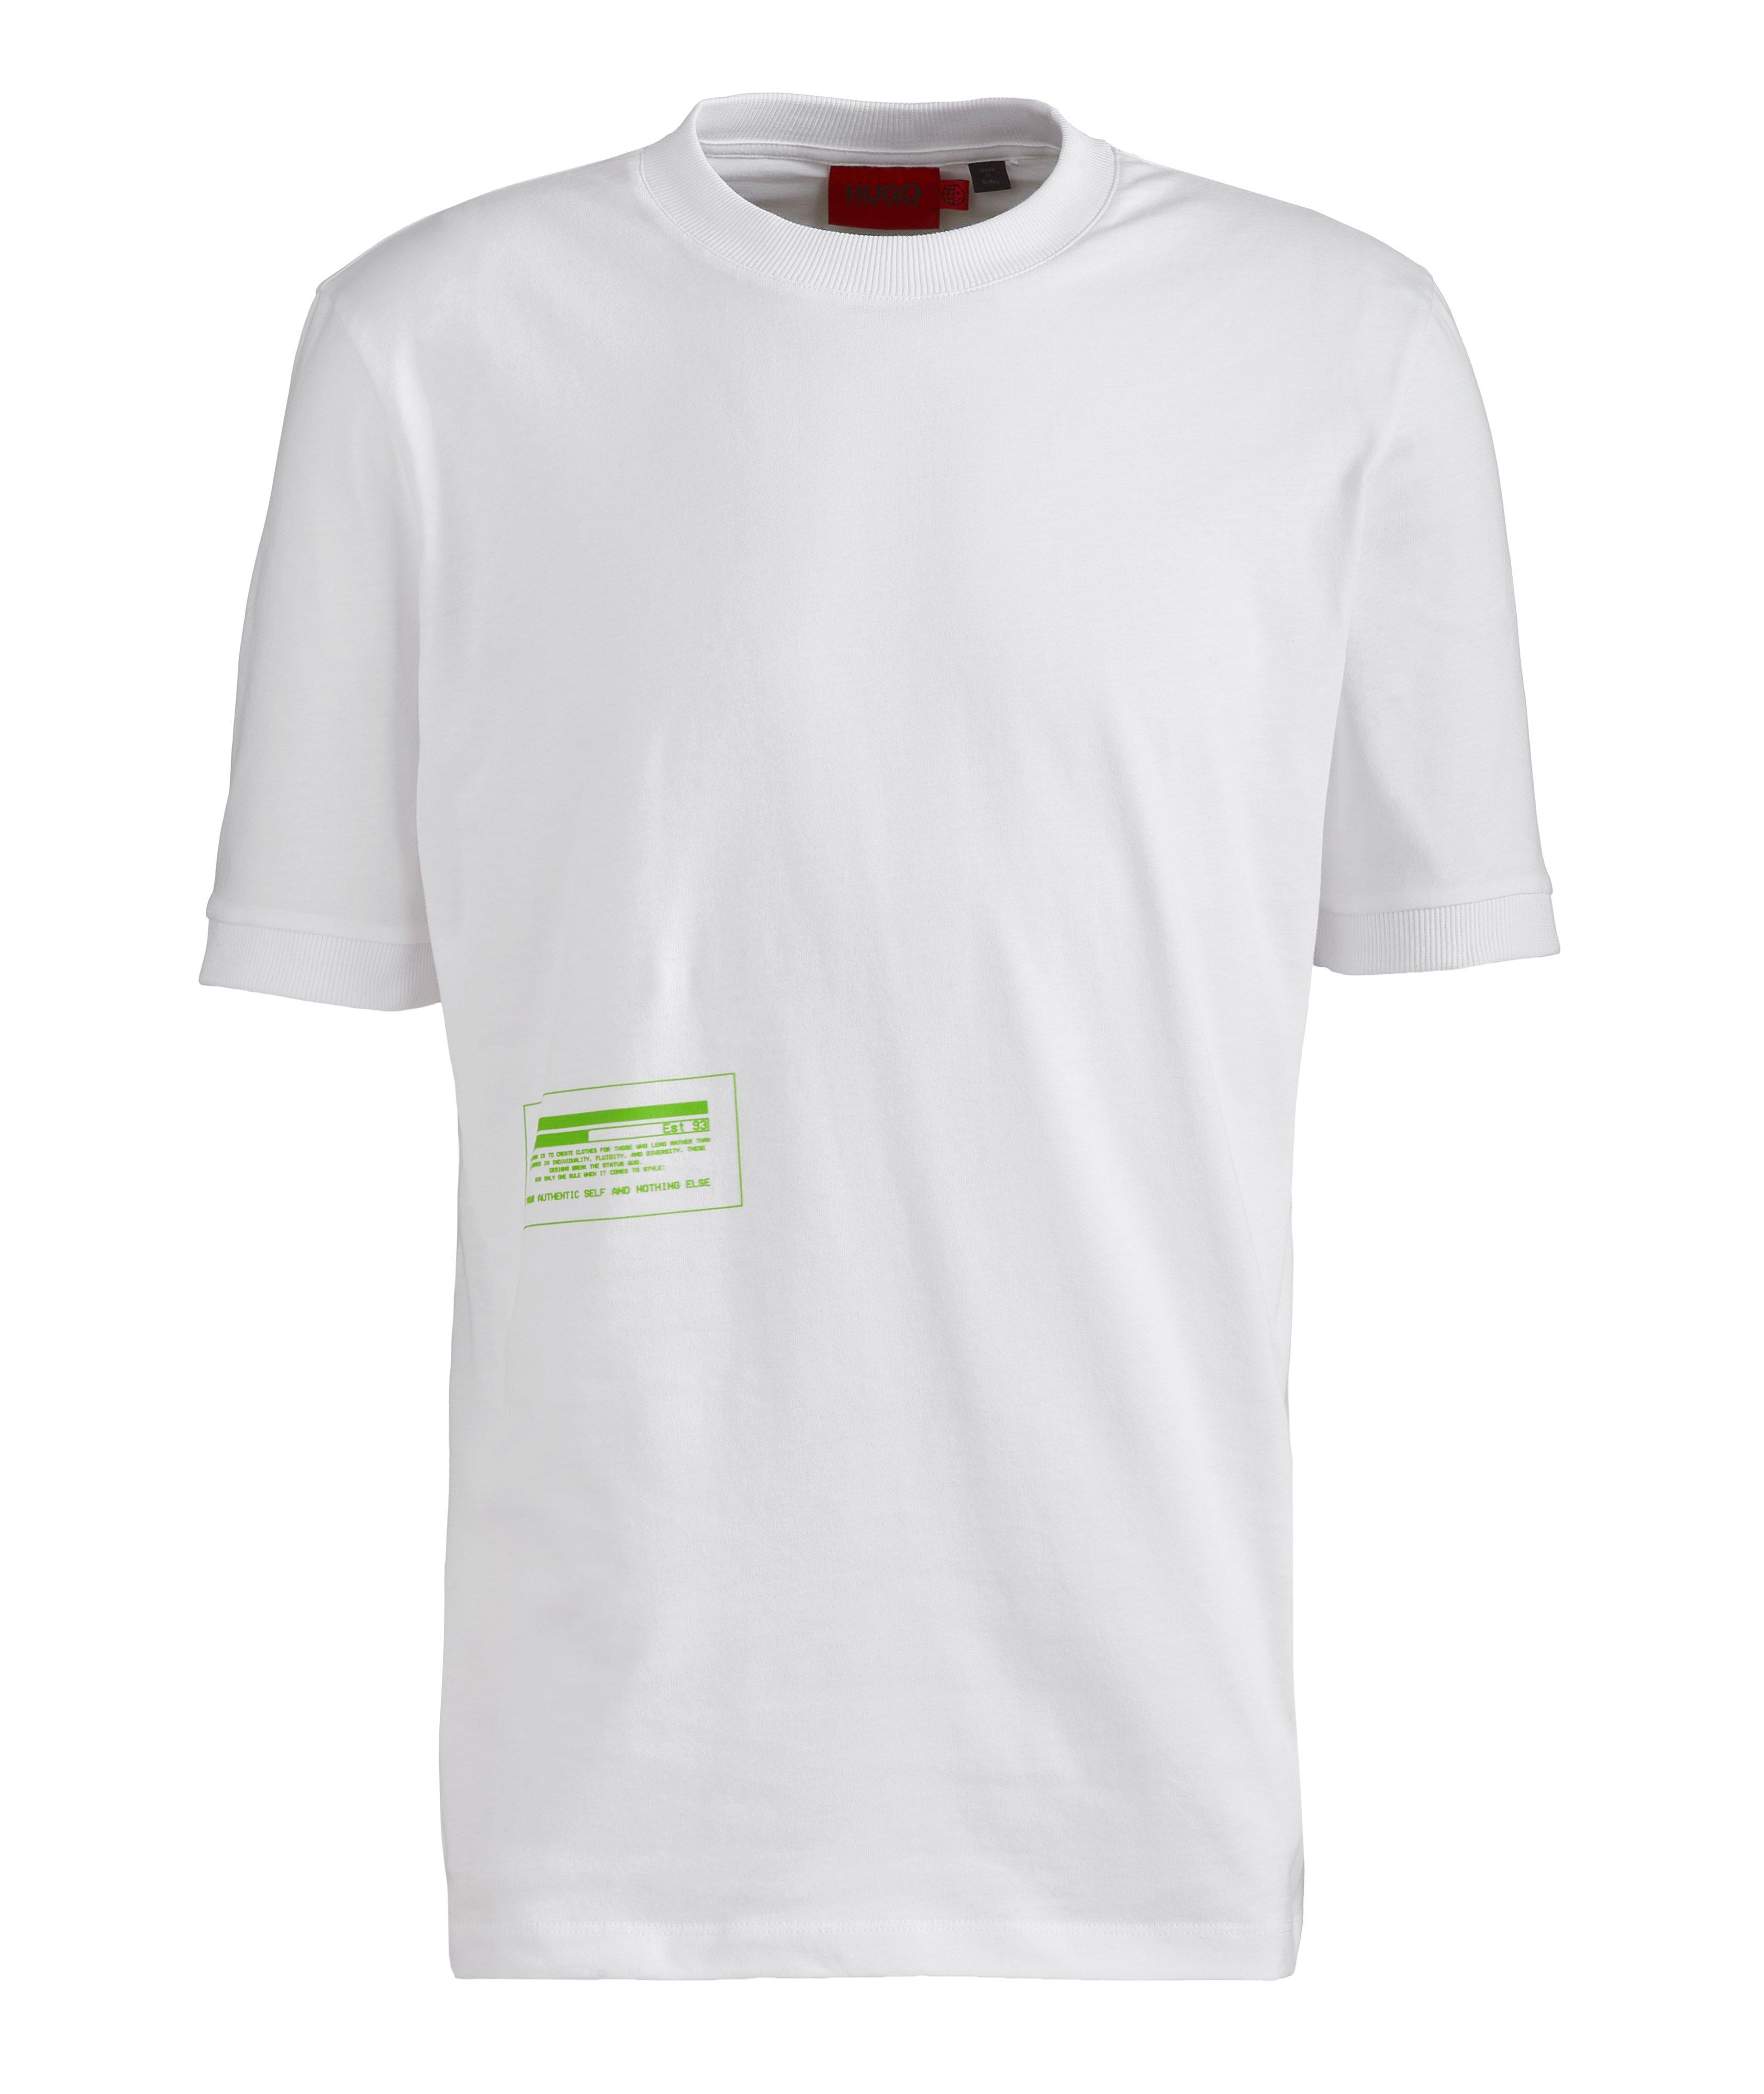 Cyber Manifesto Logo Cotton T-Shirt image 0